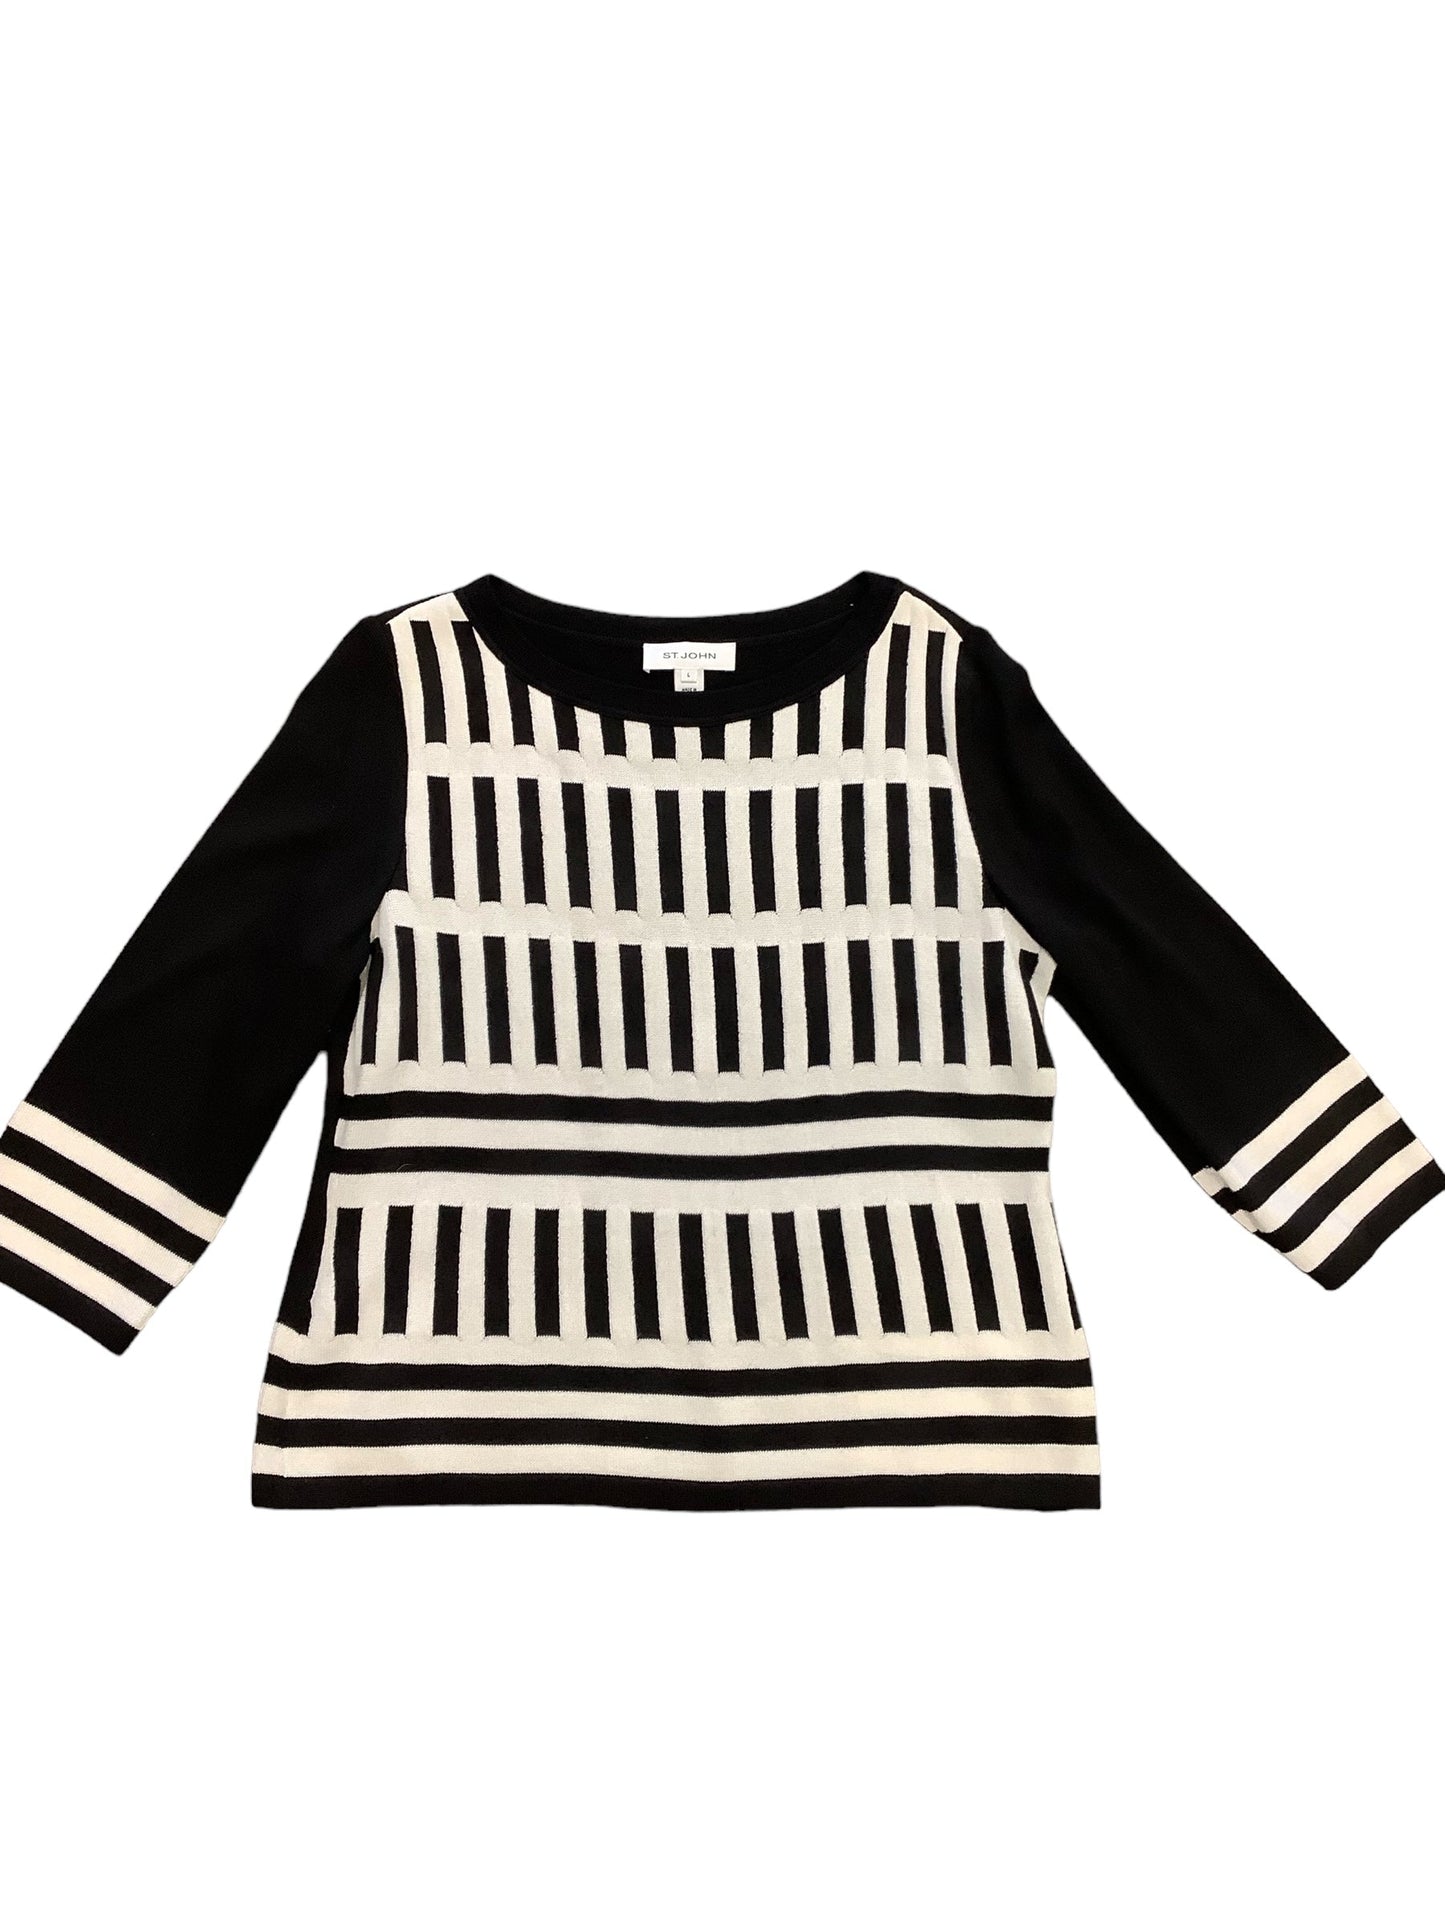 Black & White Sweater St John Knits, Size L